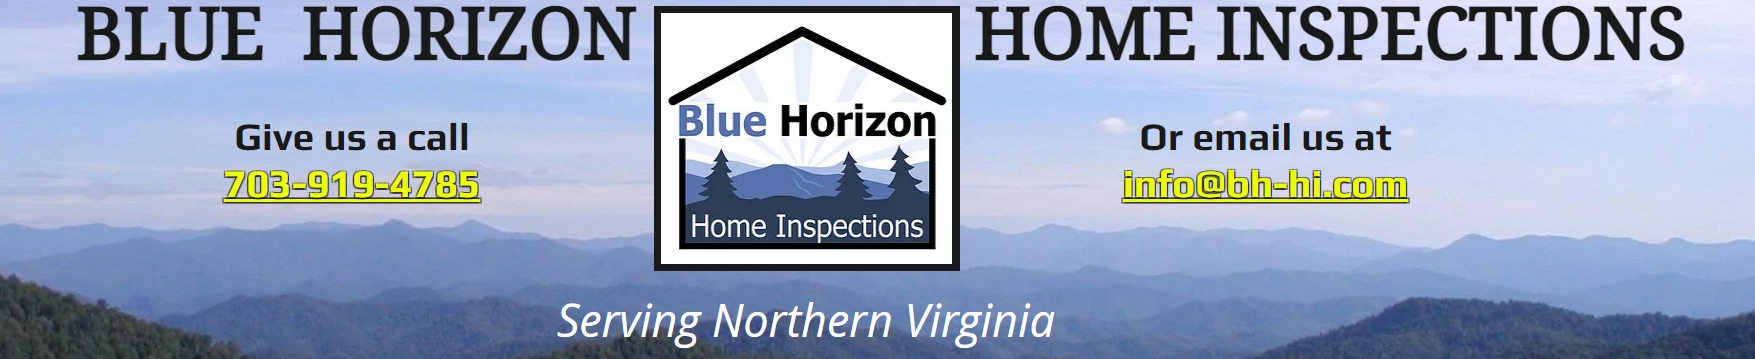 Blue Horizon Banner